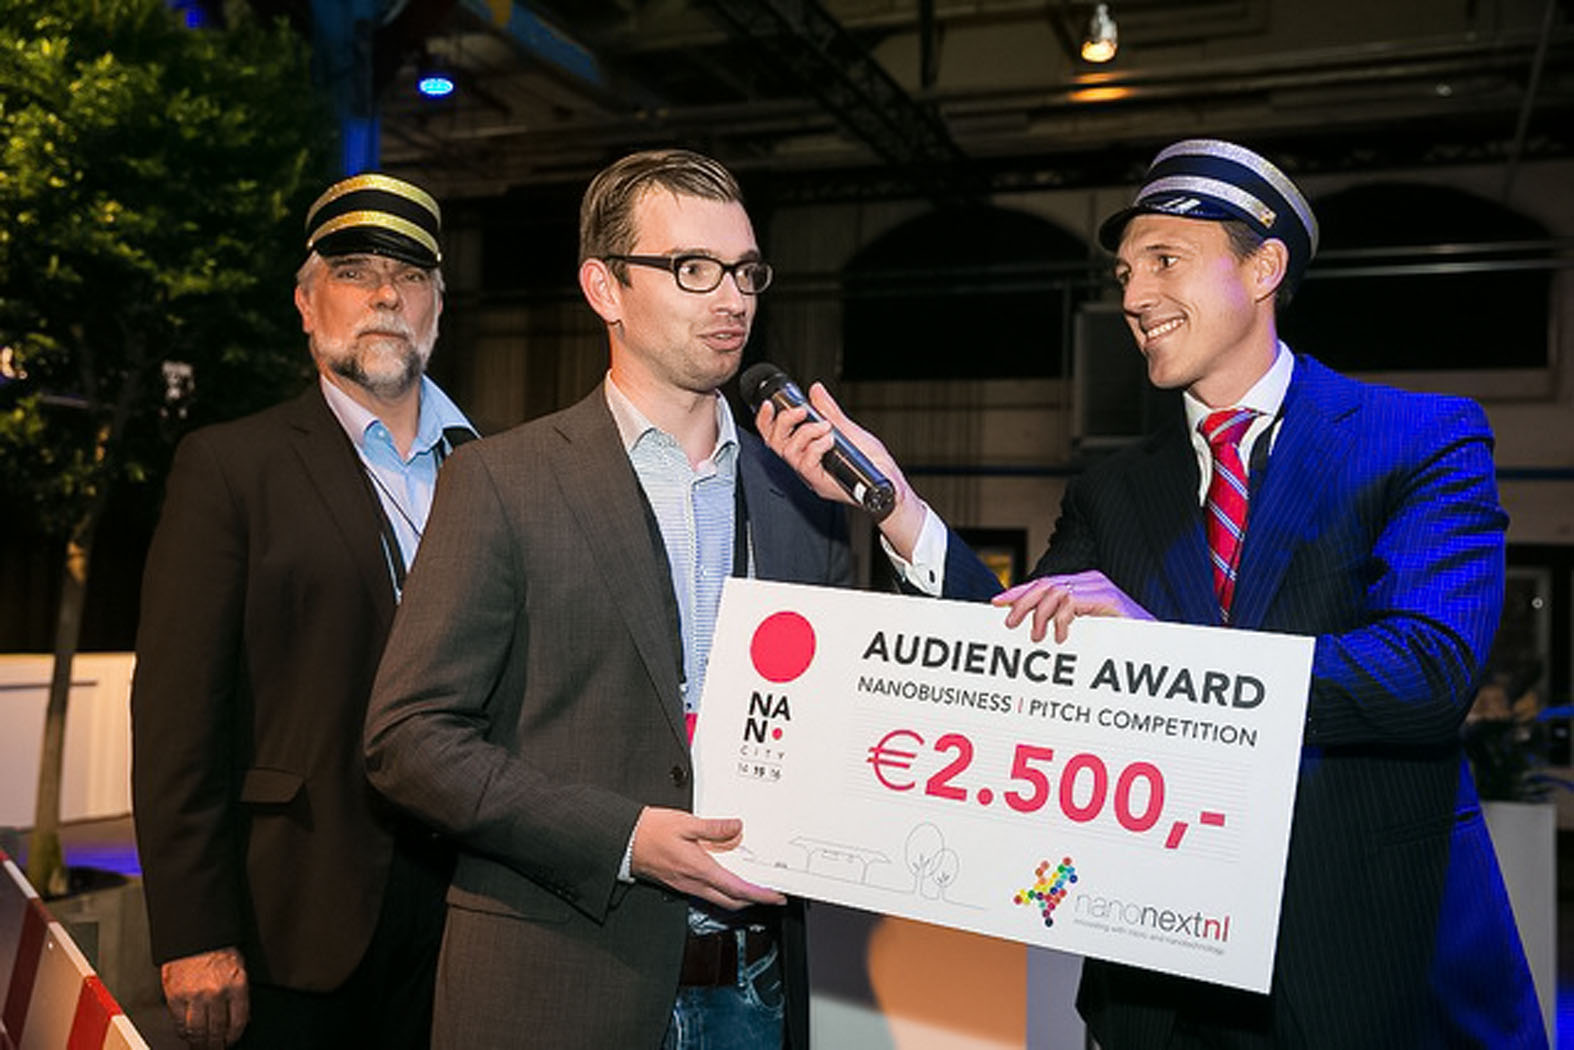 Jasper van Weerd wins audience award business pitch at NanoCity 2015